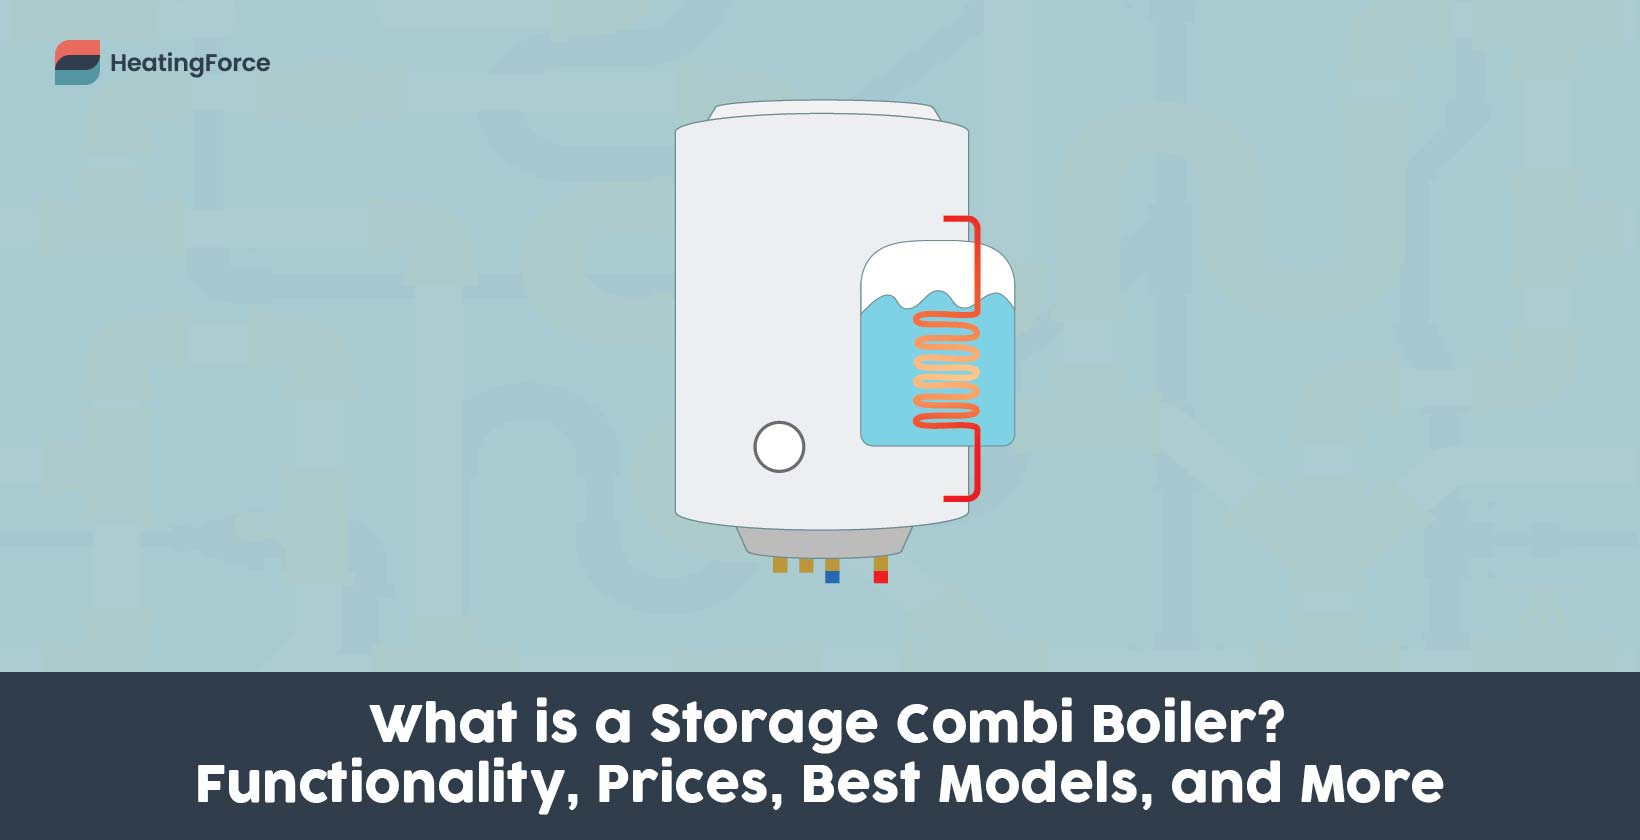 Storage combi boiler